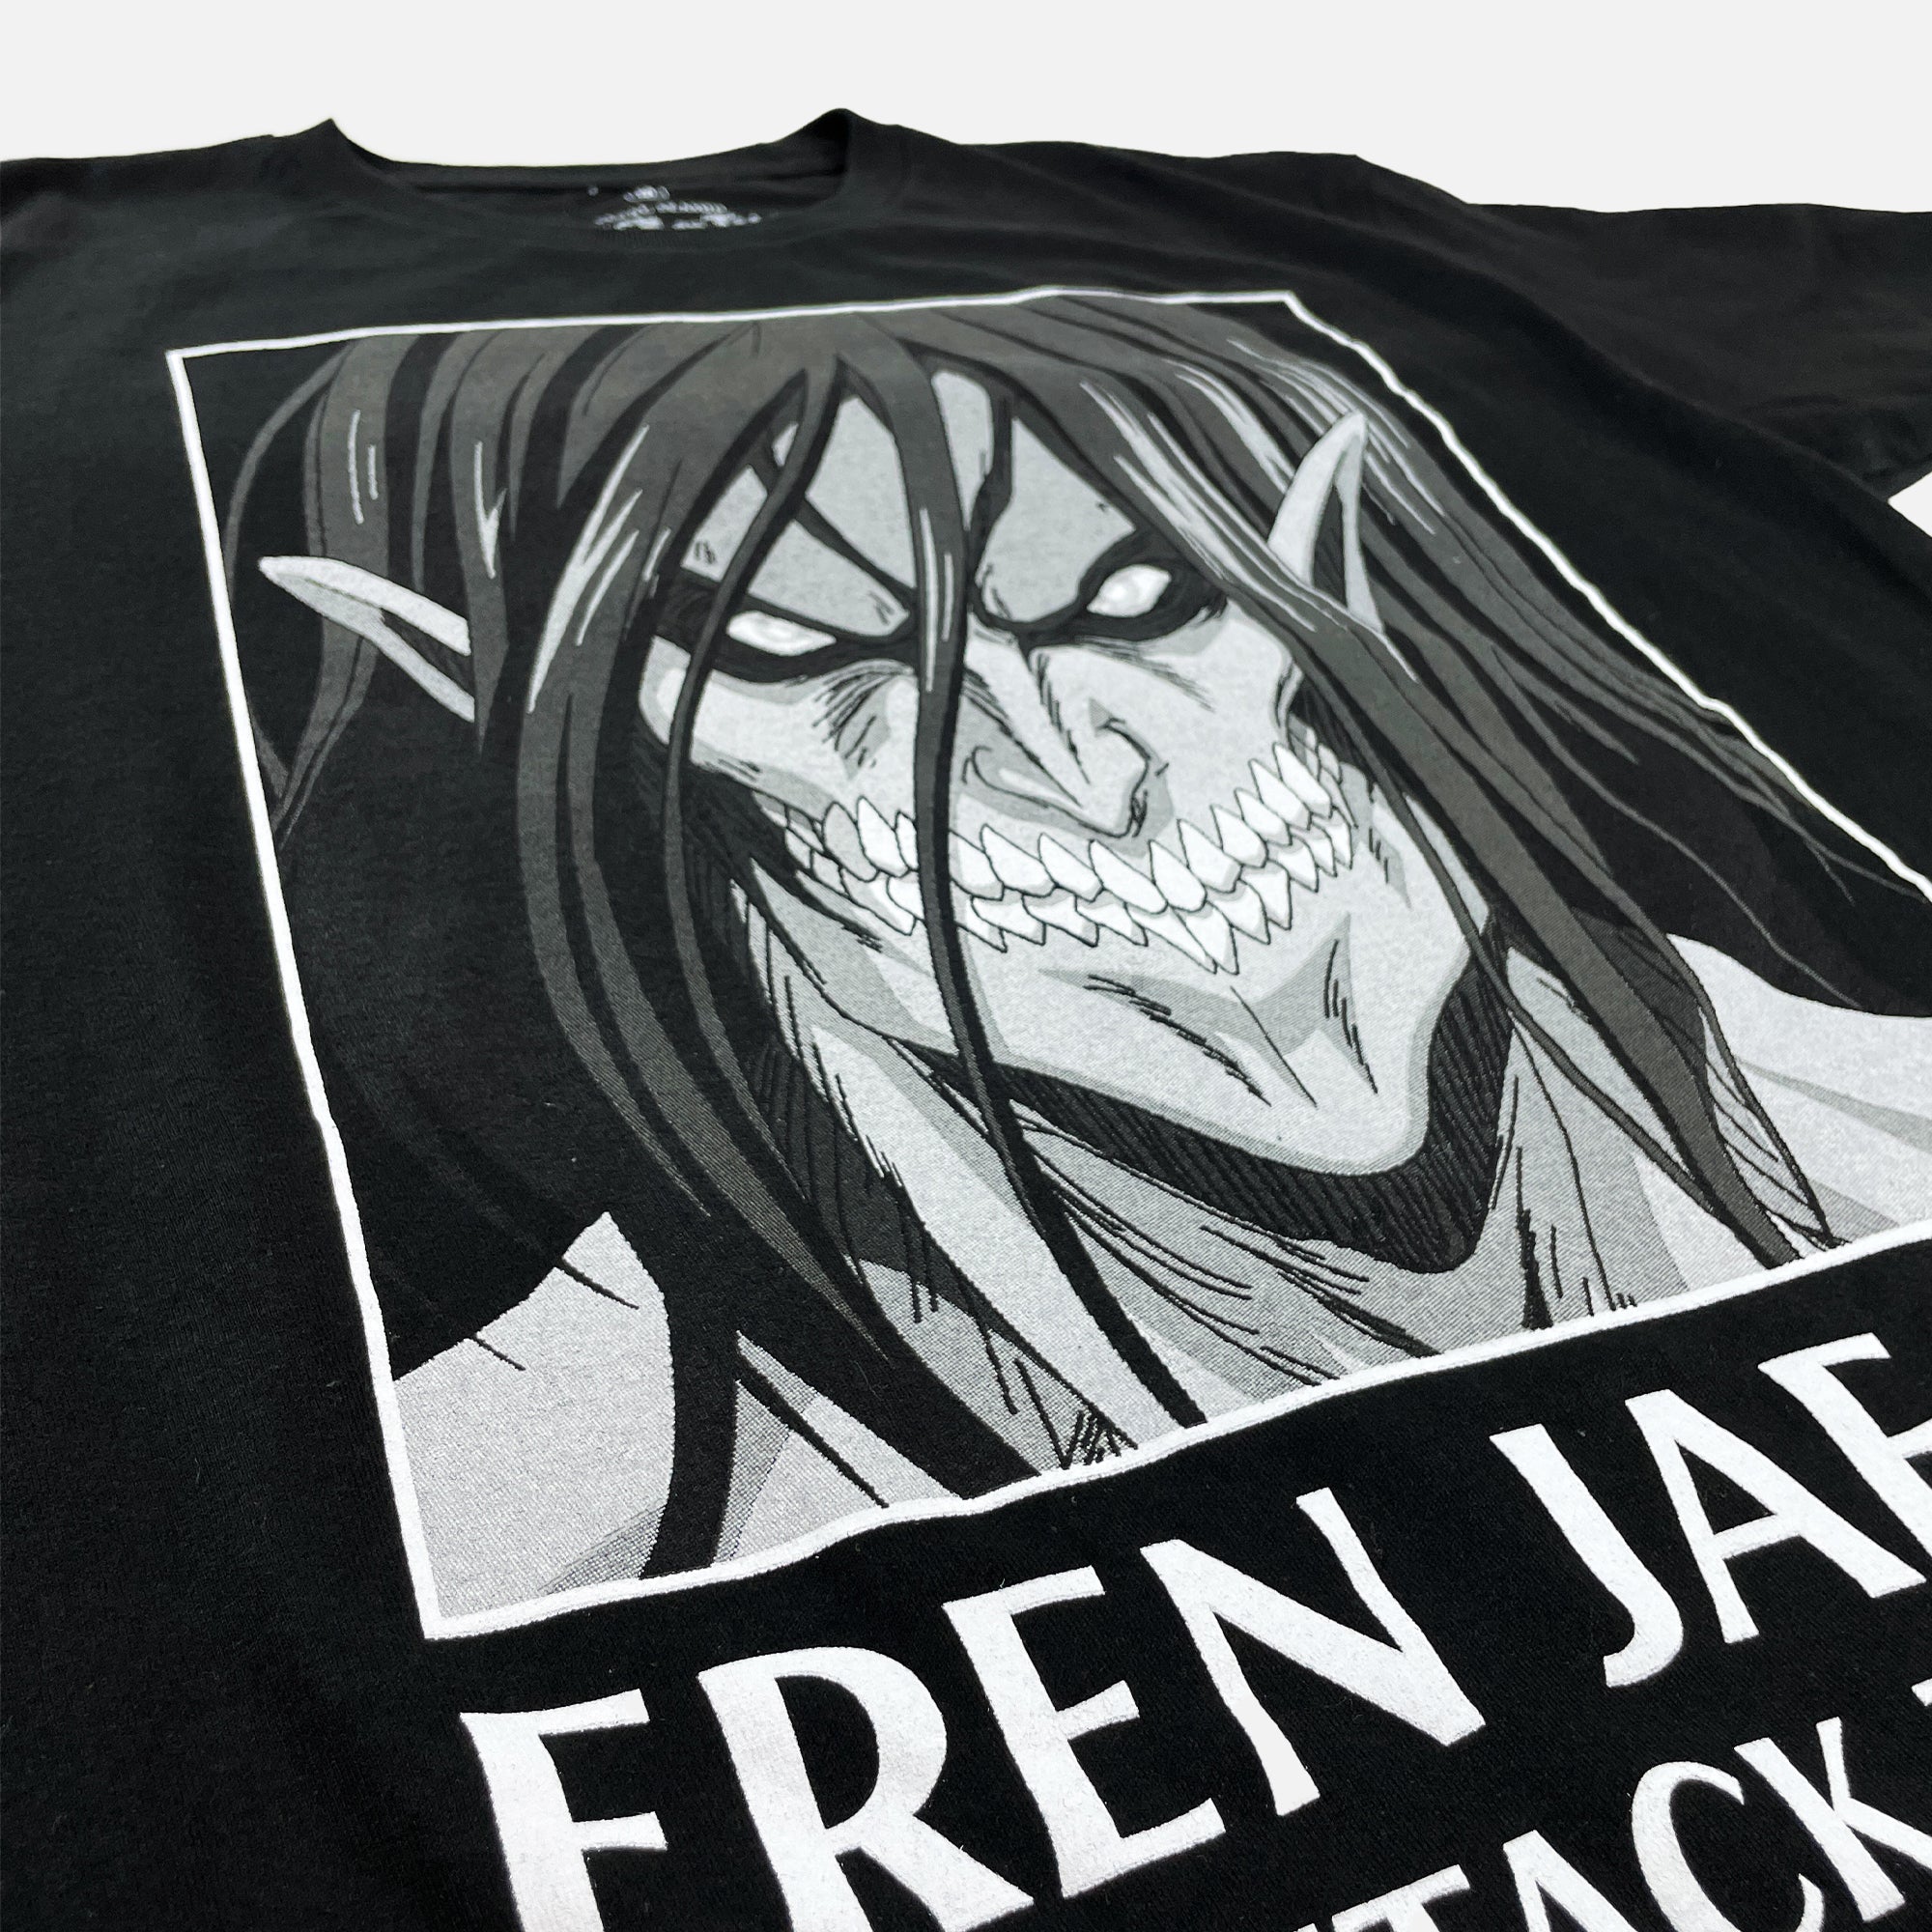 Attack on Titan - Eren Attack Titan T-Shirt - Crunchyroll Exclusive! image count 1